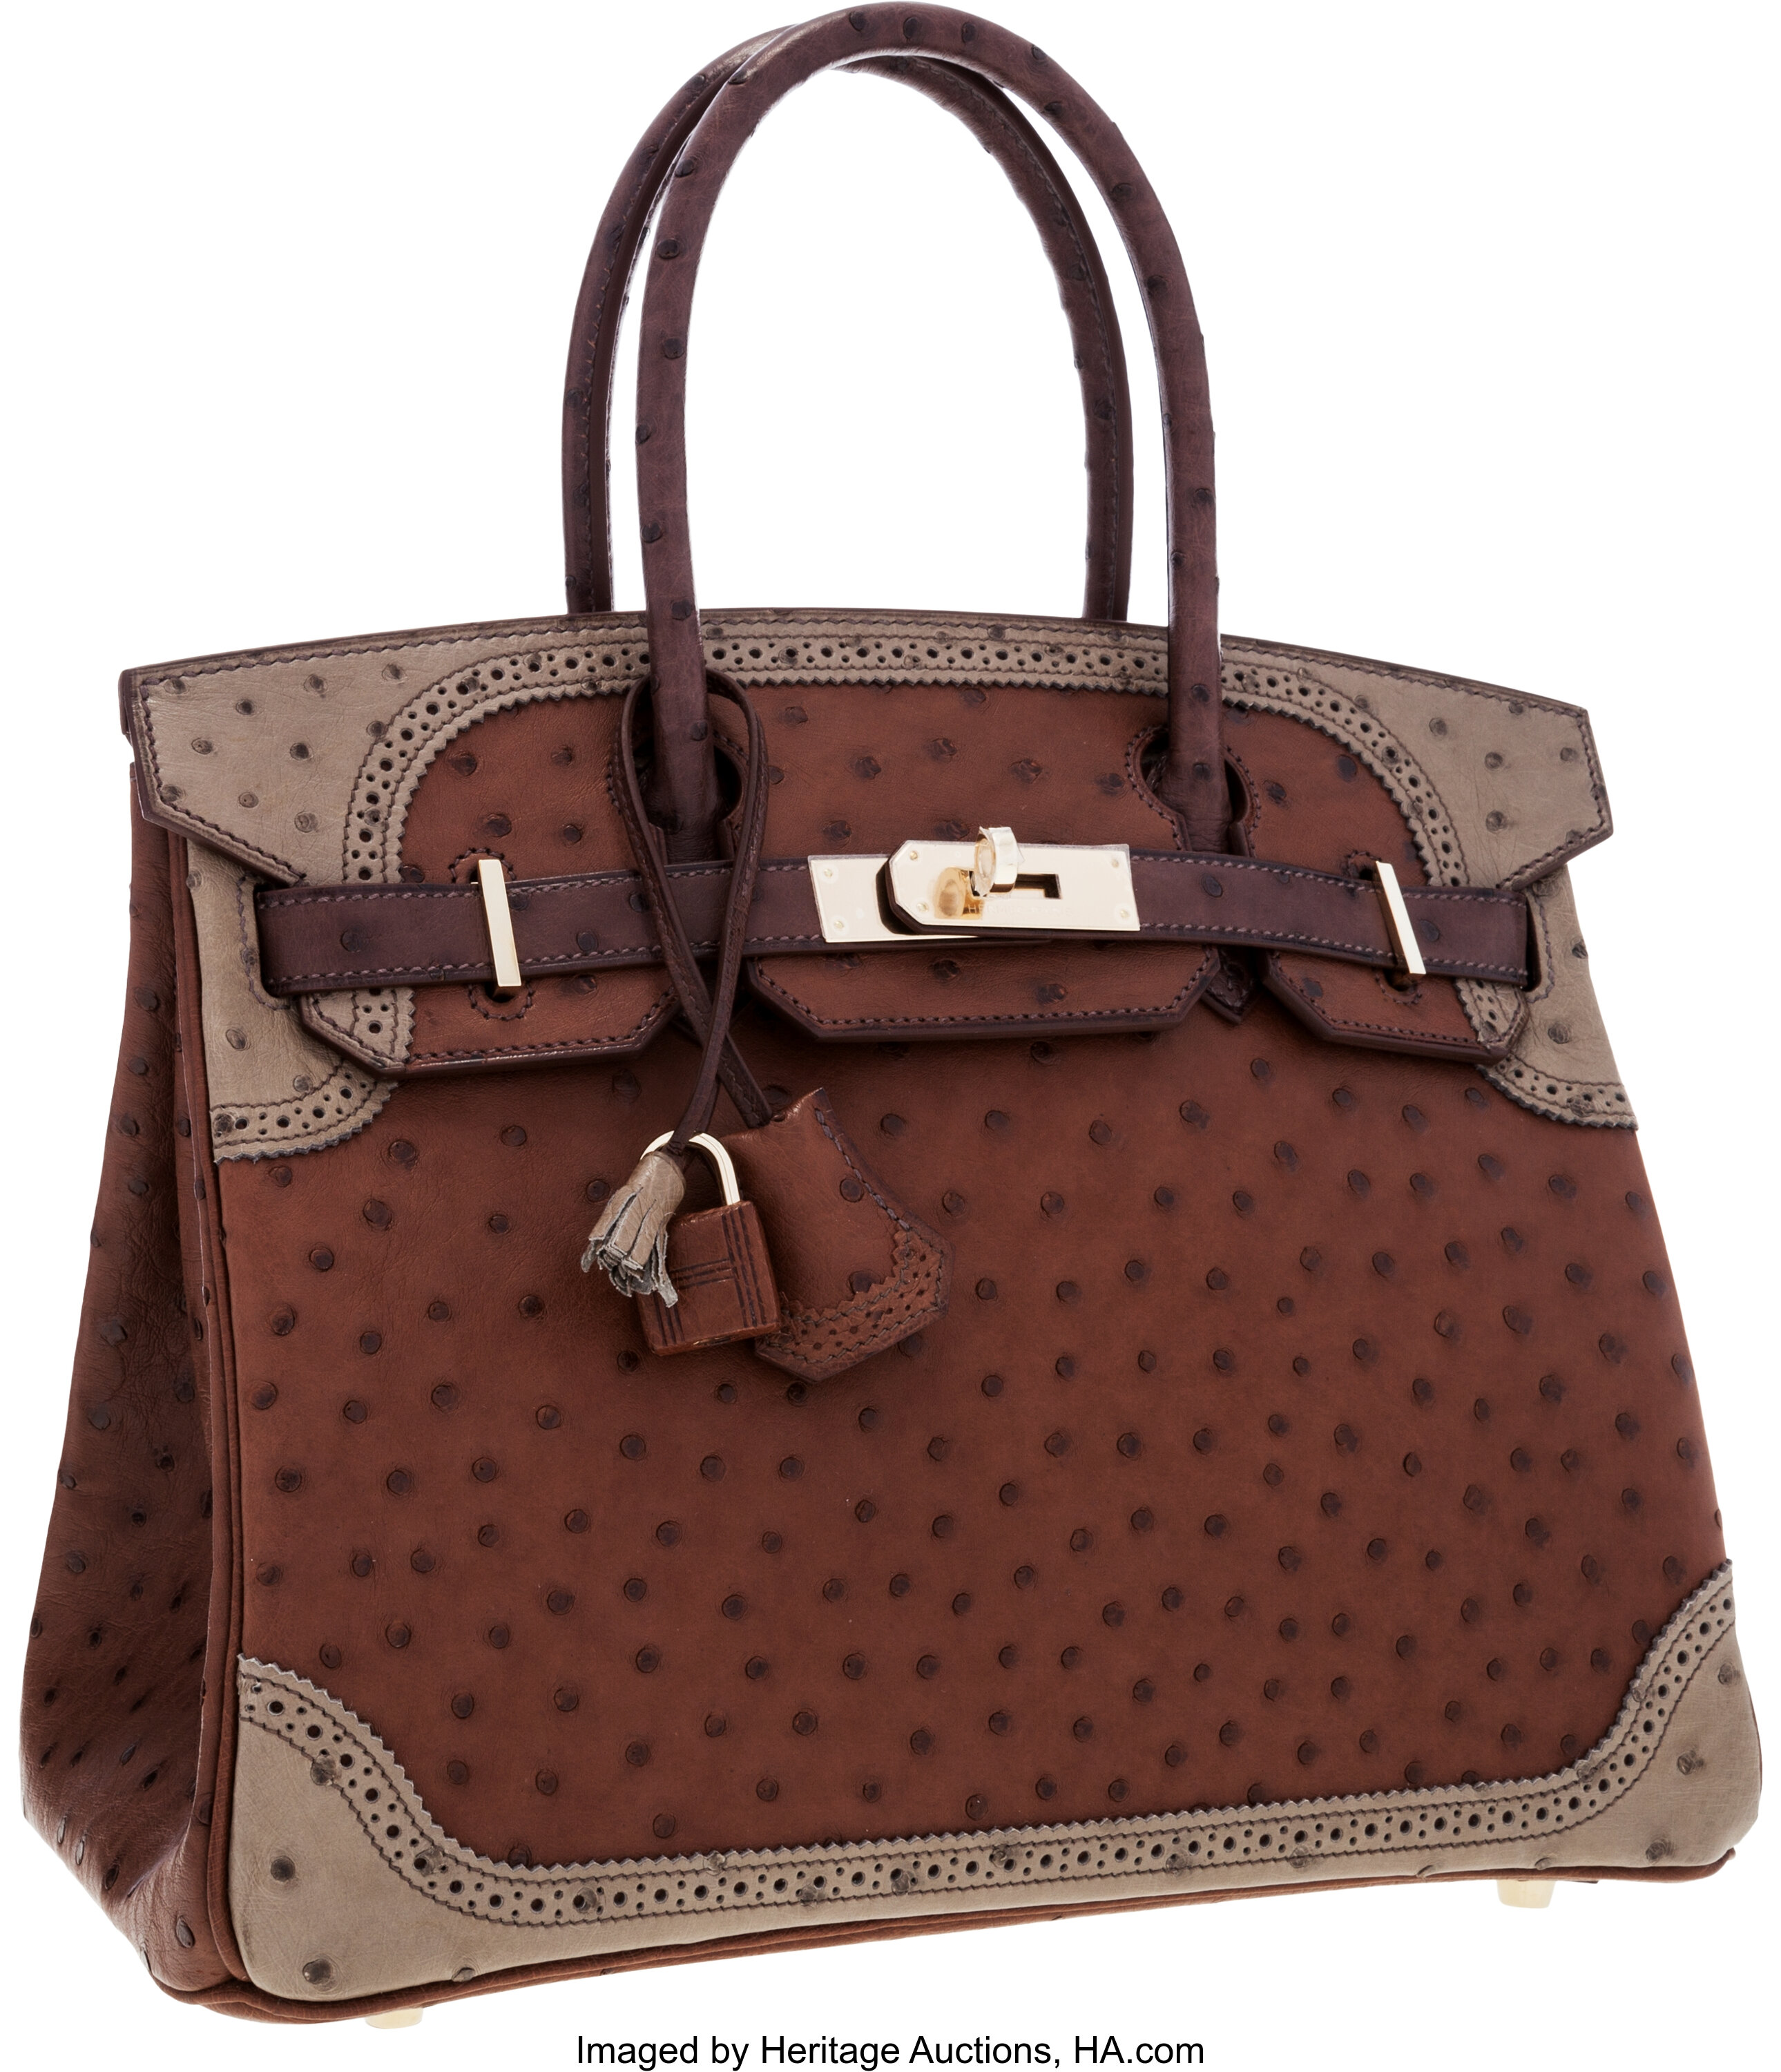  Hermes 30cm Marron Fonce Brown Ostrich Birkin Bag with Gold